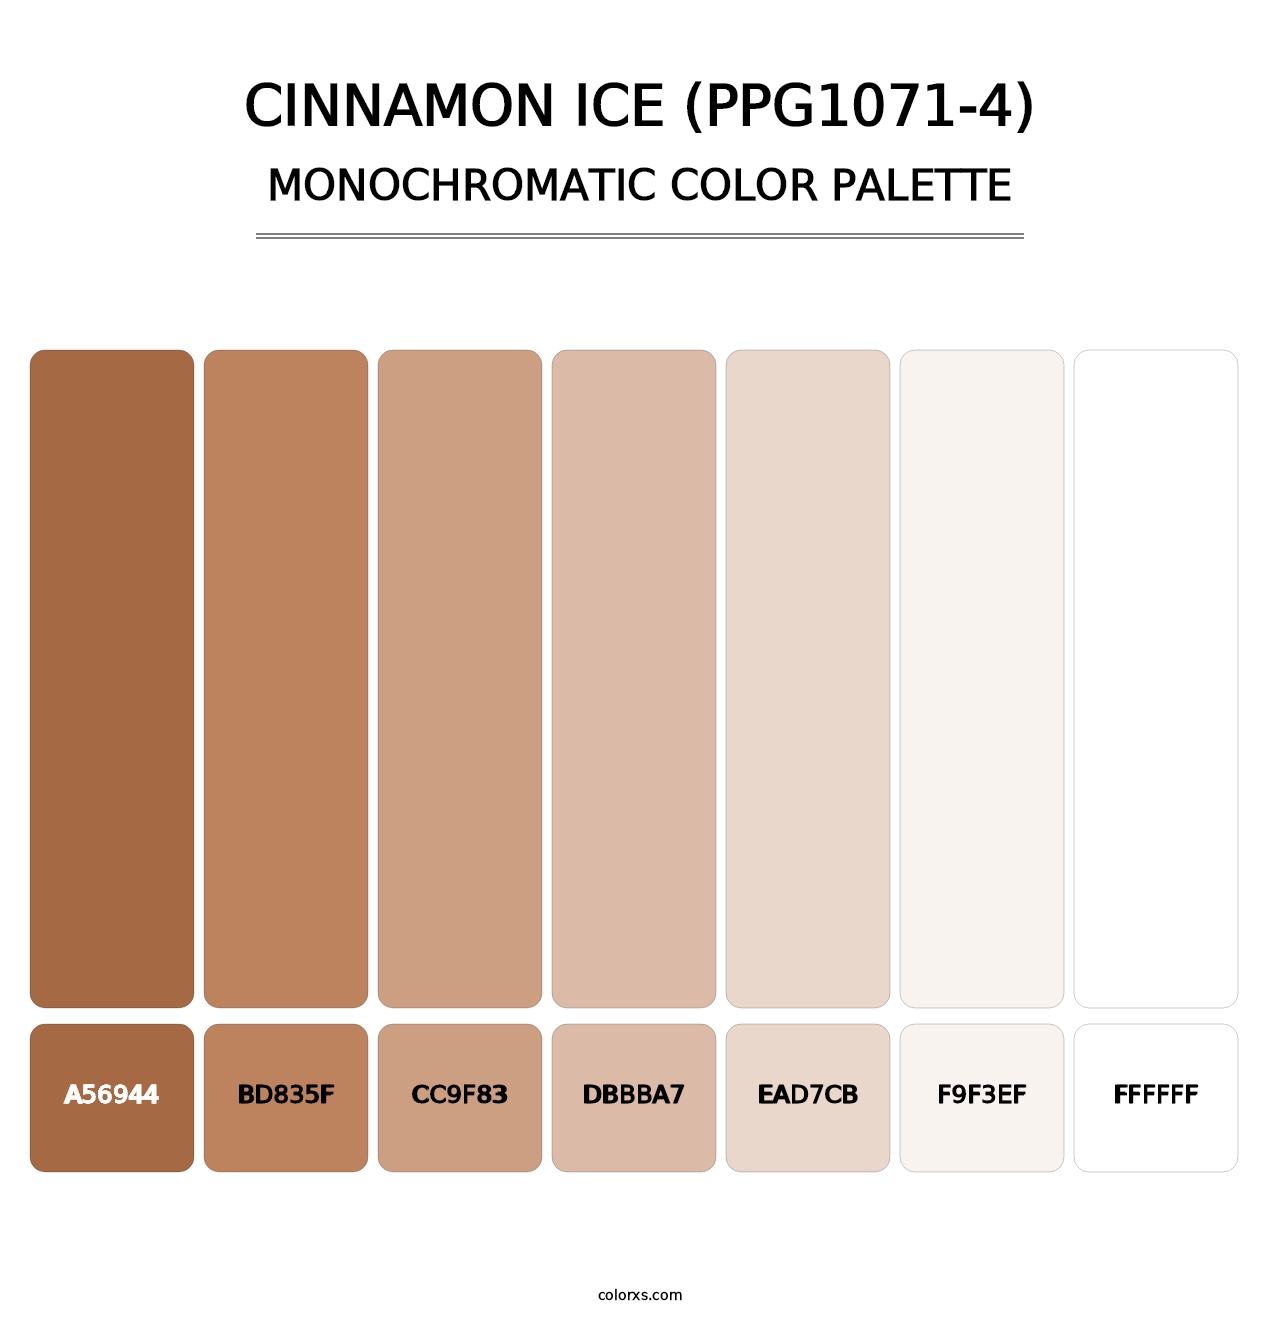 Cinnamon Ice (PPG1071-4) - Monochromatic Color Palette